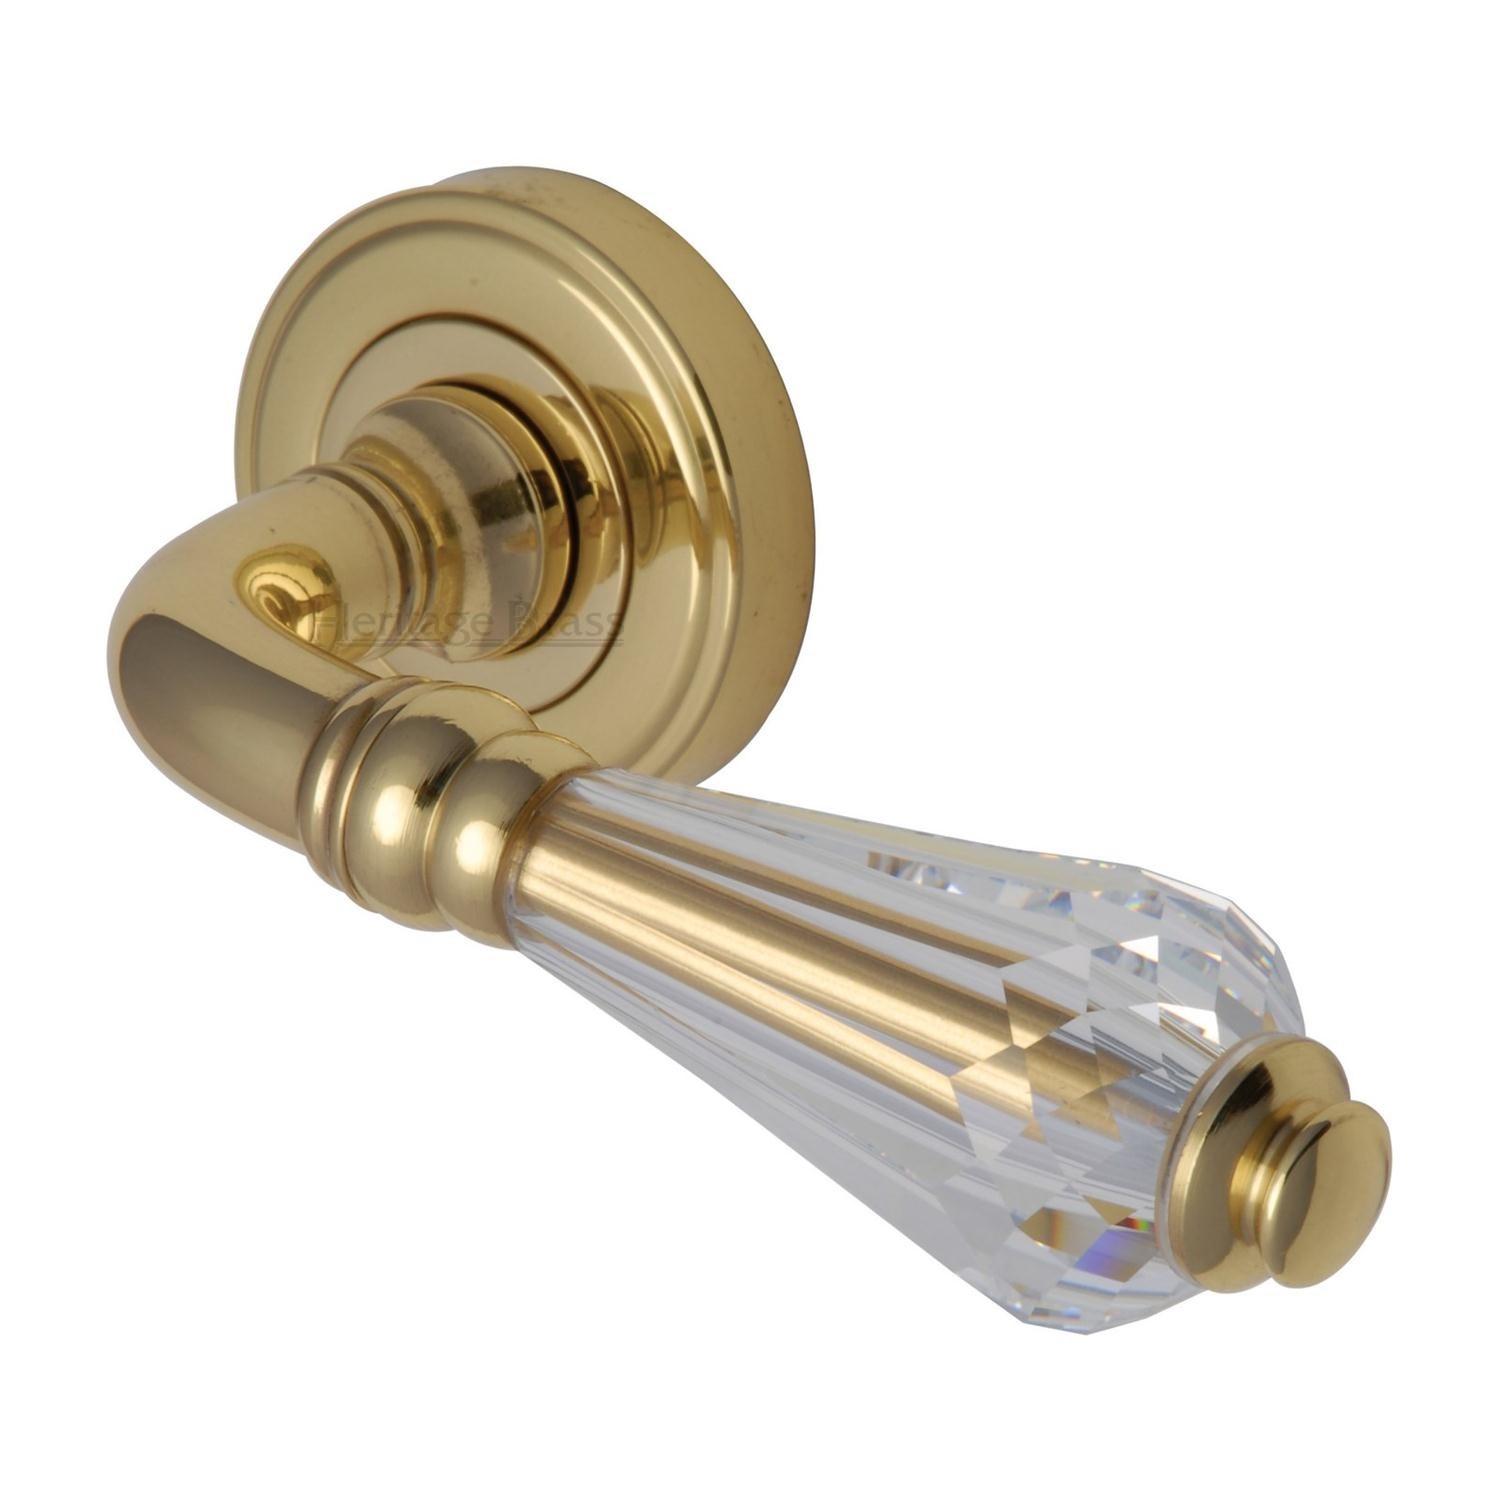 Heritage Brass Door Handle Lever Latch on Round Rose Crystal Design